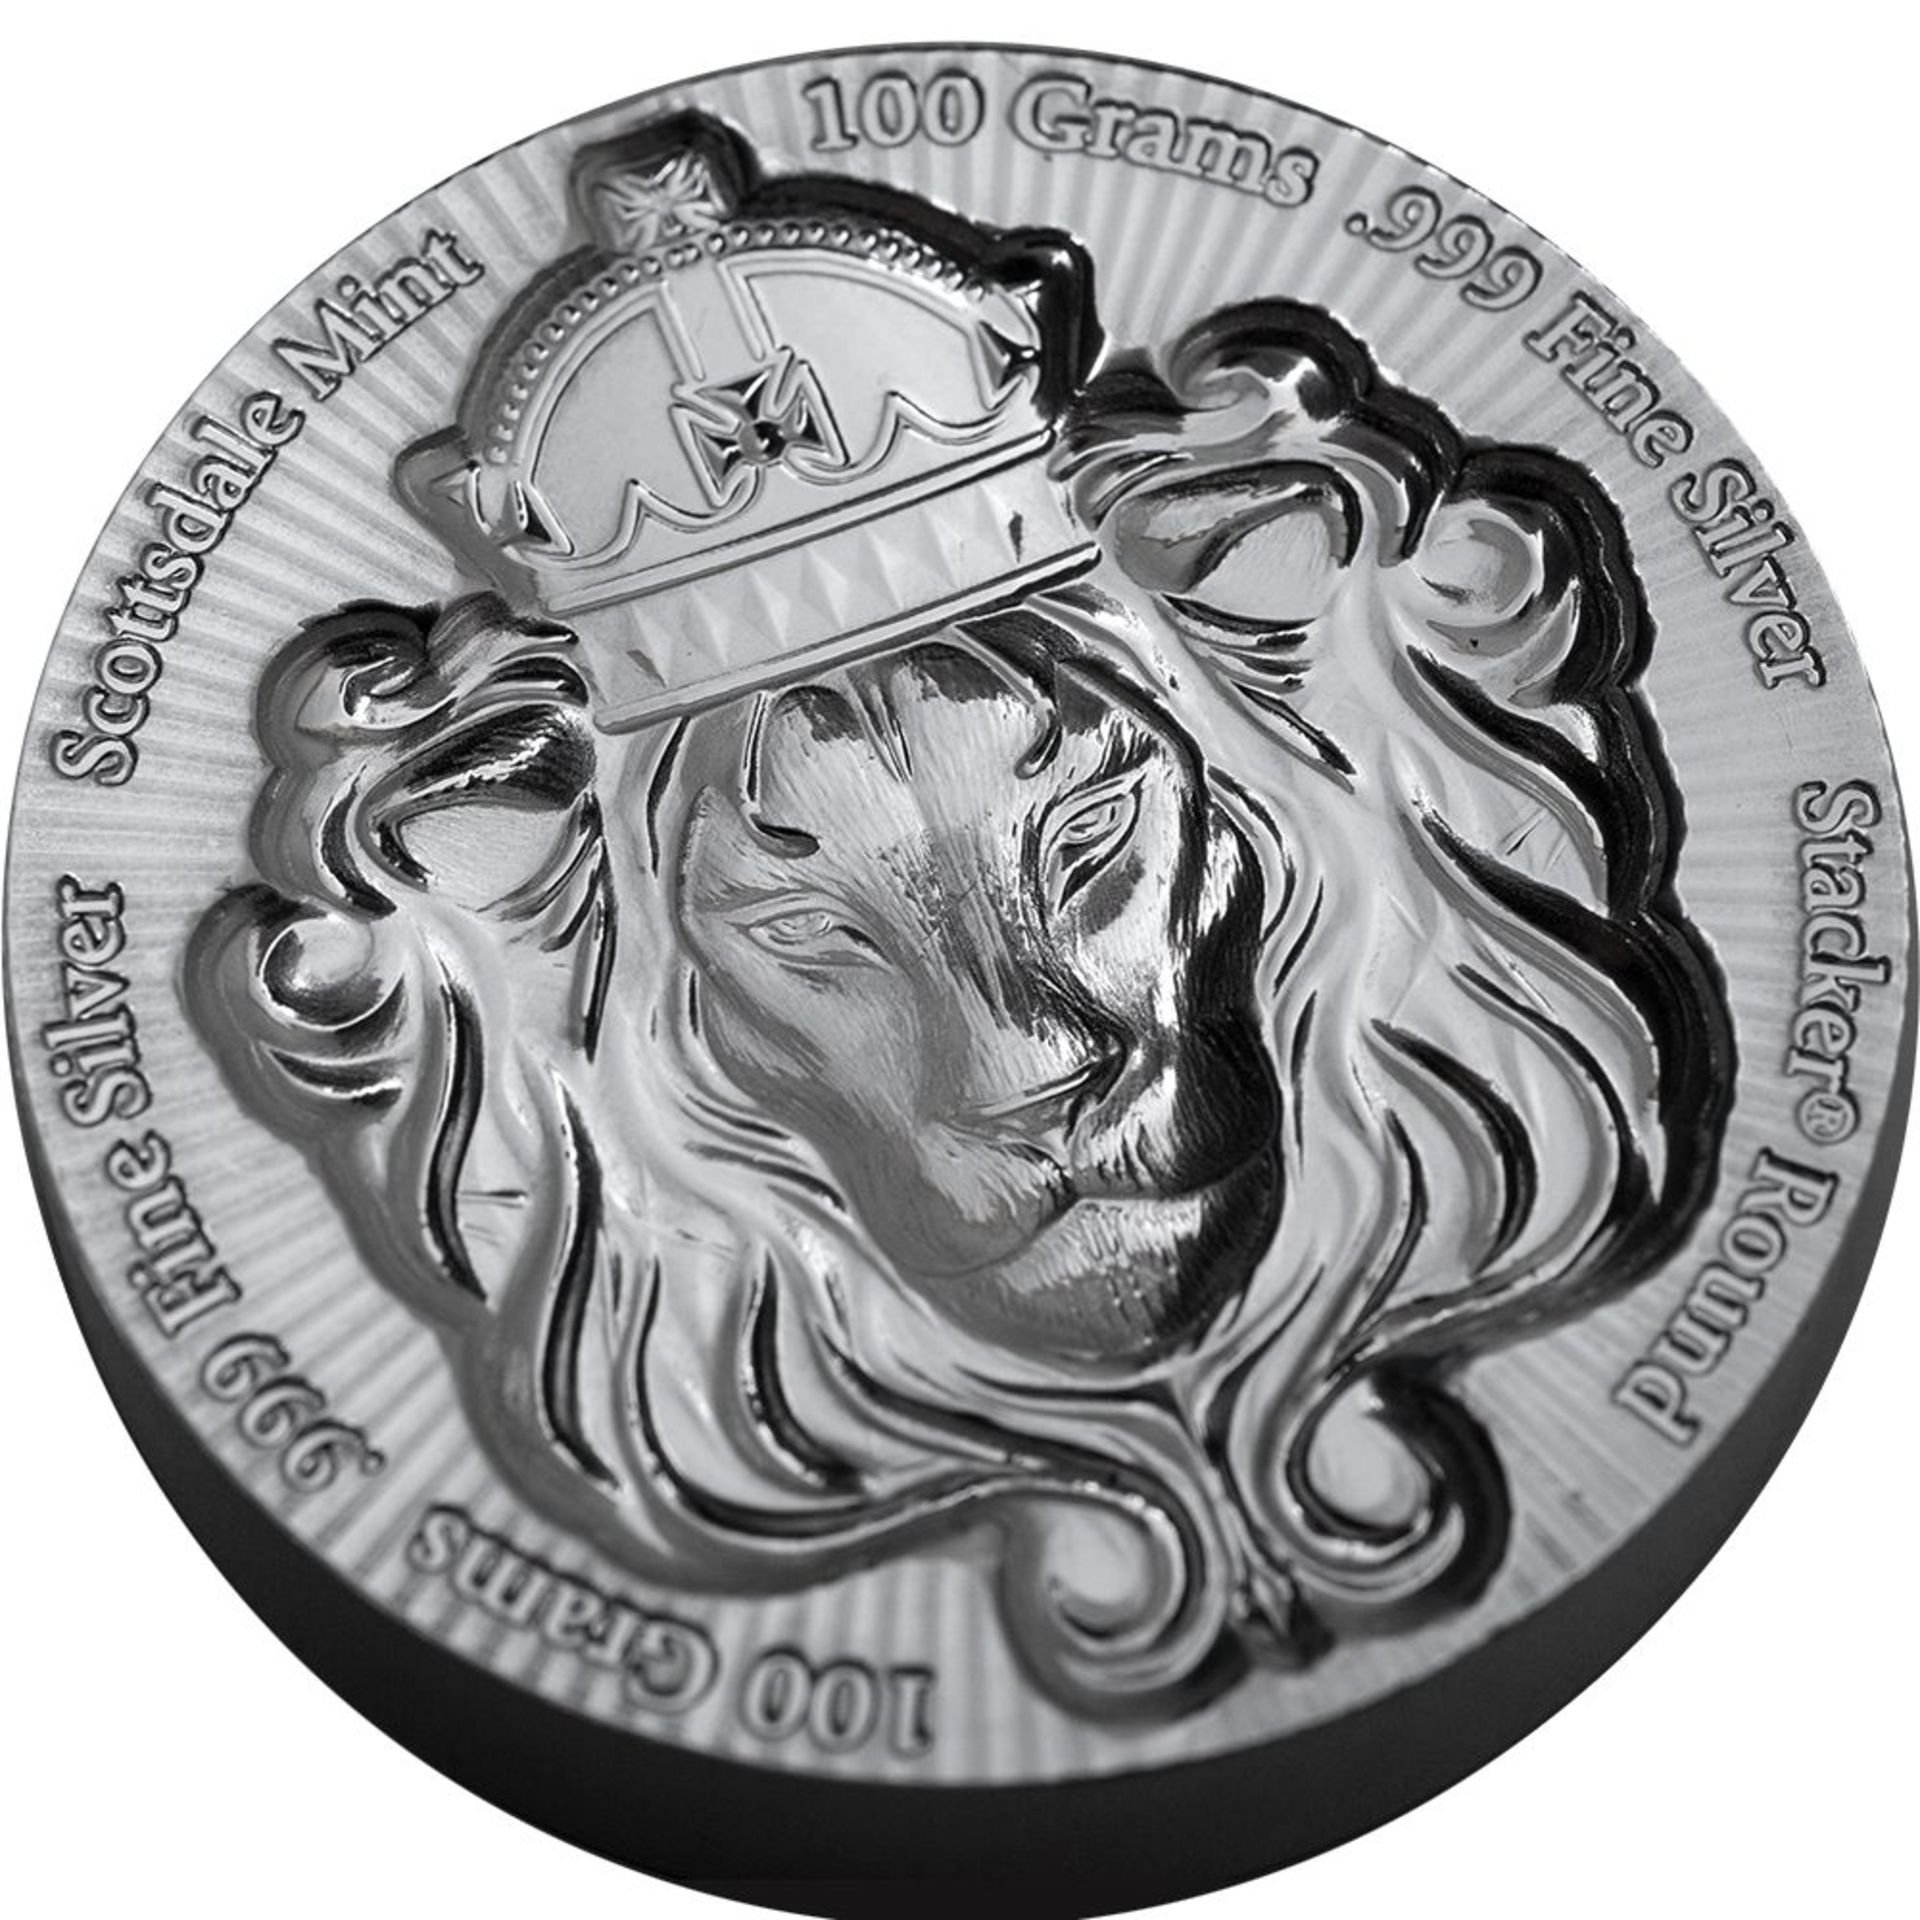 100 Gram Scottsdale Mint Silver Stacker Round - Image 2 of 2